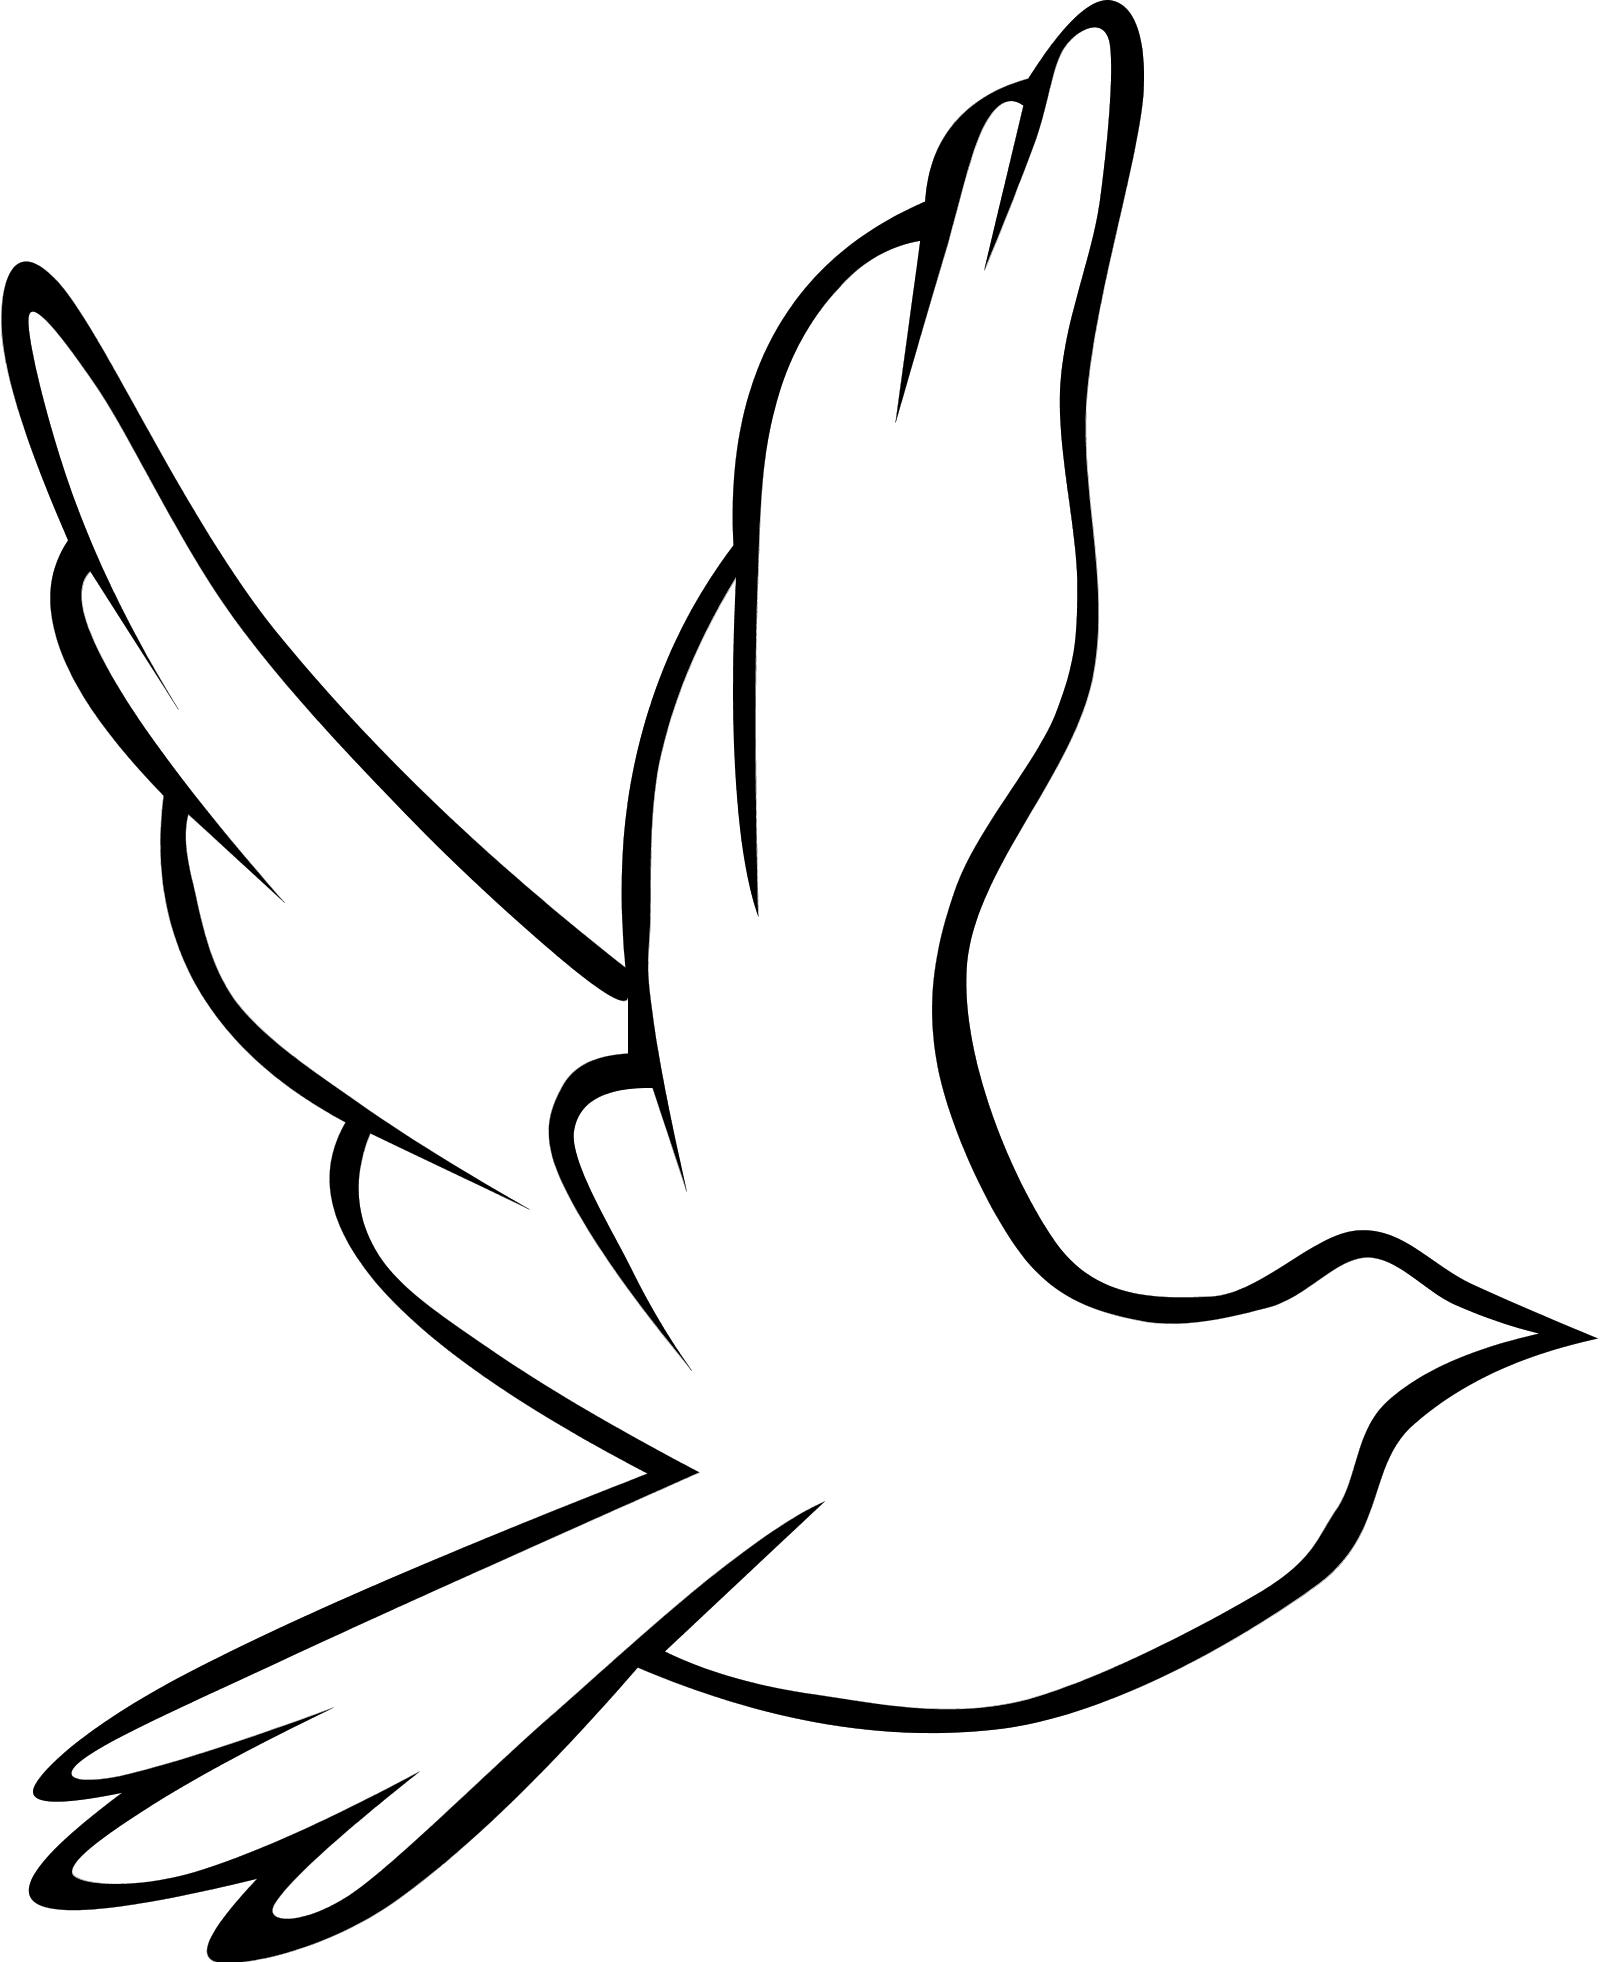 Catholic dove symbol.